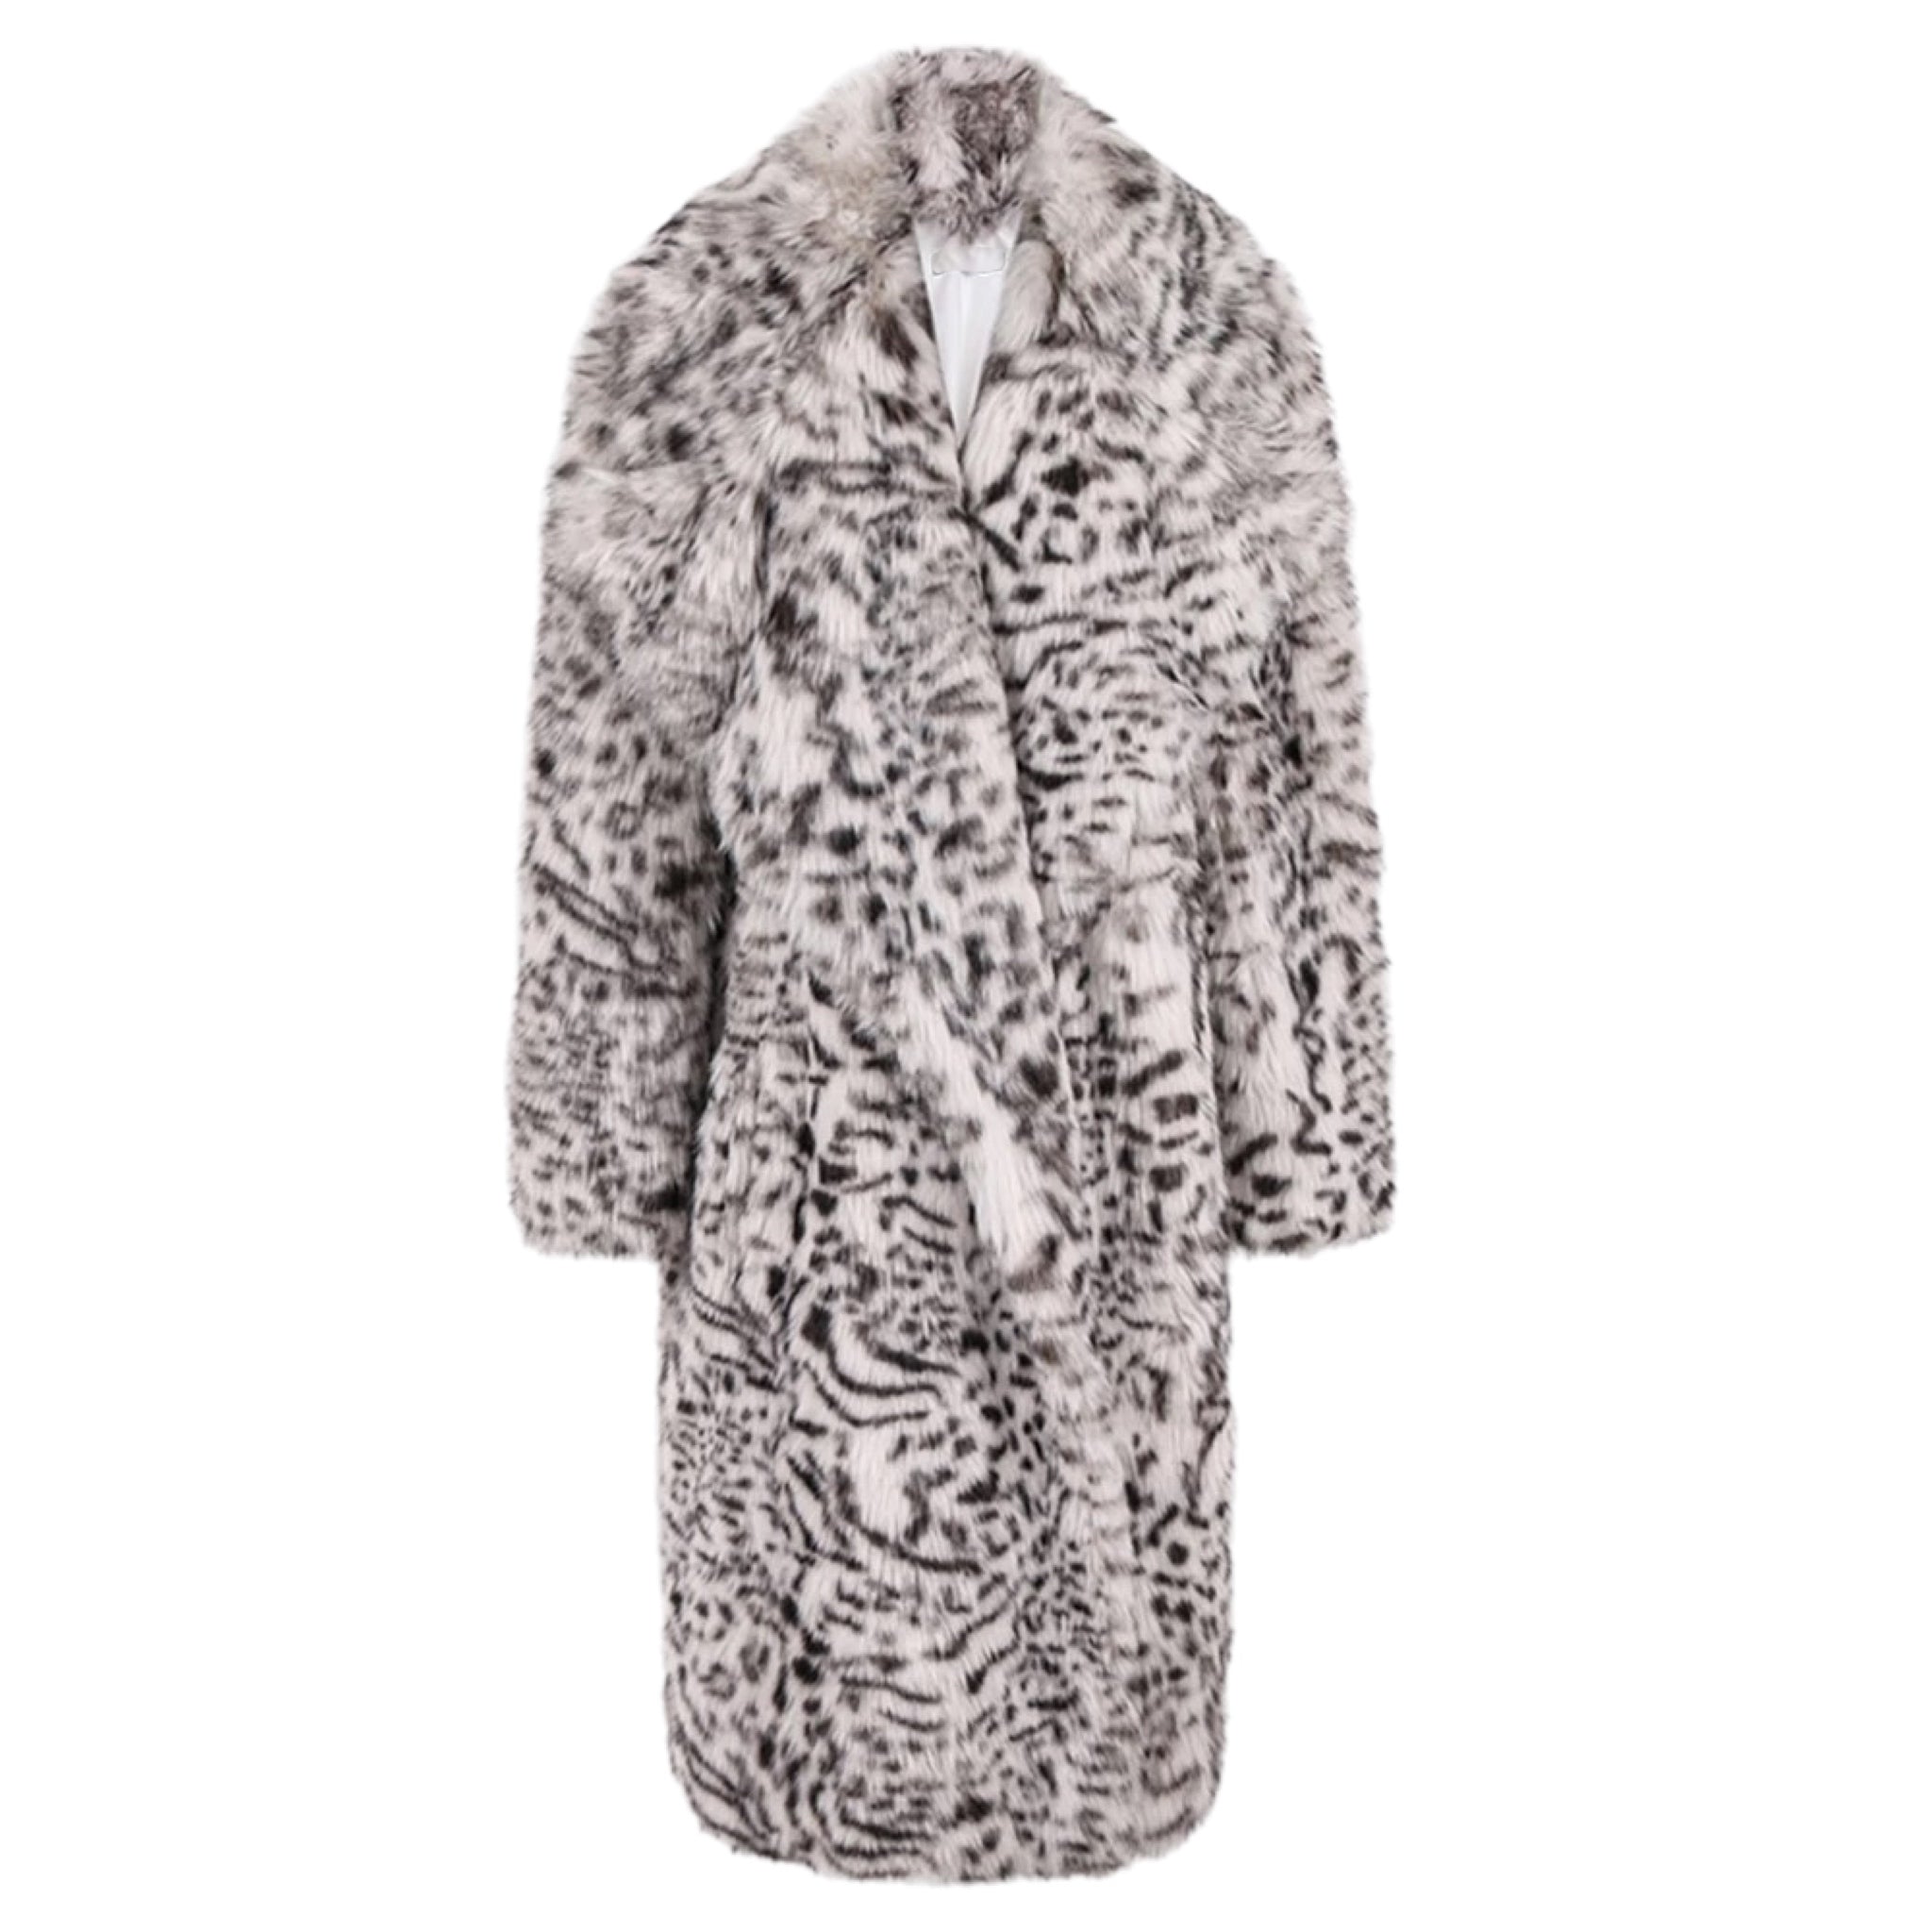 GOLDxTEAL faux fur printed oversized coat. Gorgeous loose vegan fur coat with large lapels.